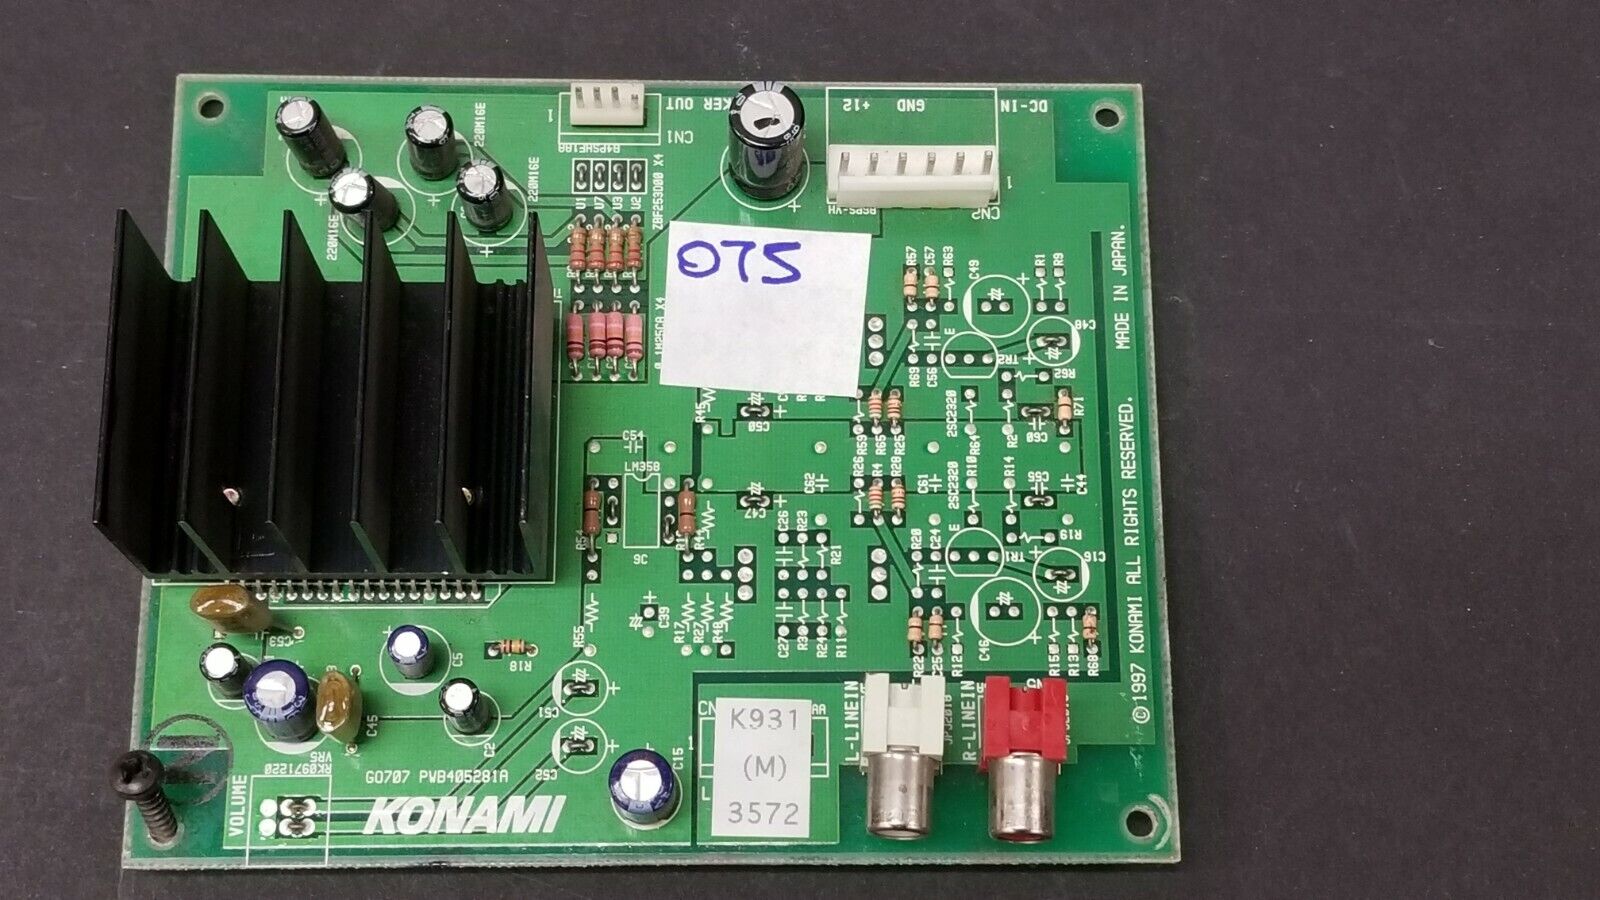 Konami Audio Amplifier GO707 PWB405281A CIRCUIT BOARD PCB for ARCADE GAME #o75